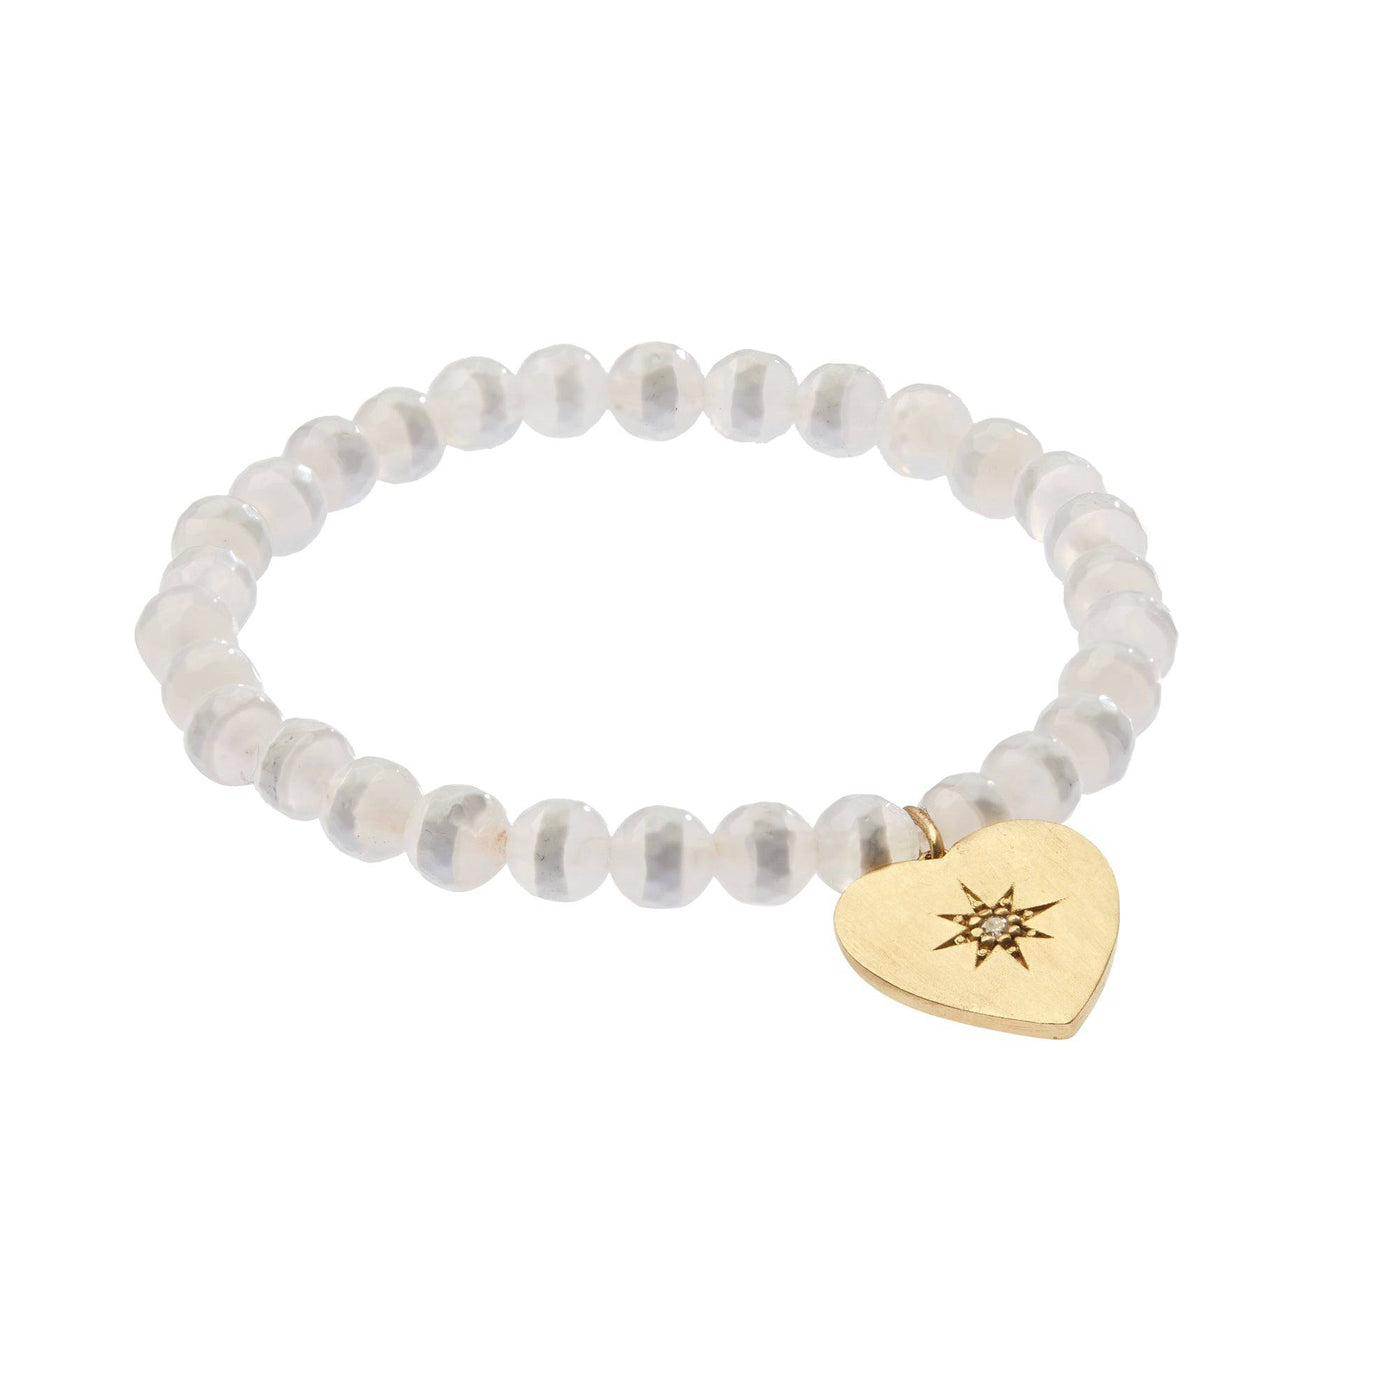 White Agate Heart Bracelet - Globetrotter - Ileana Makri store